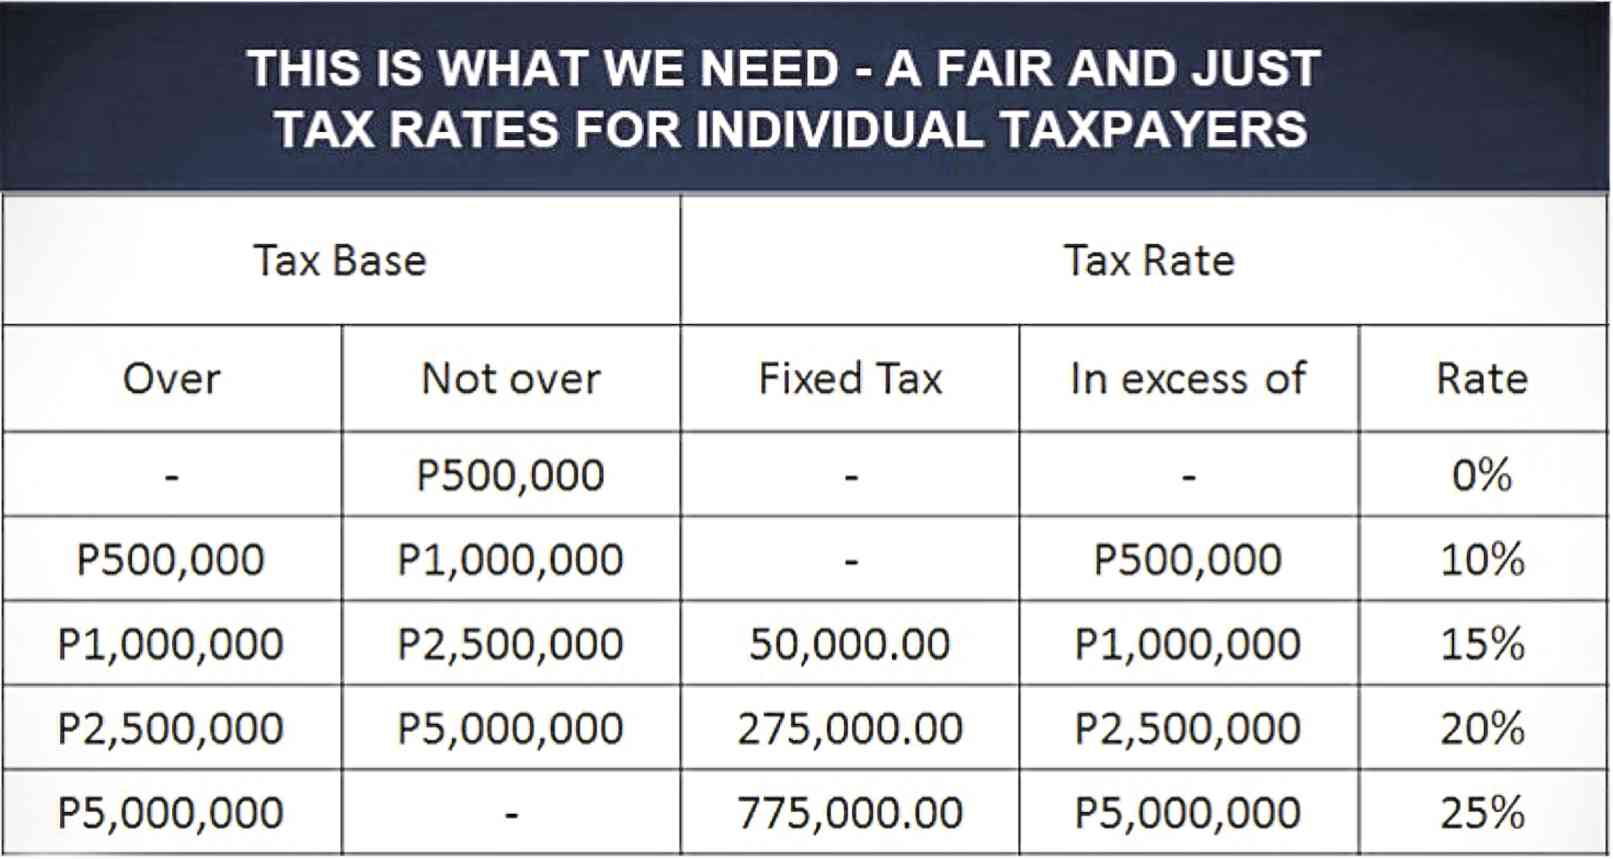 2019-income-tax-philippines-table-carfare-me-2019-2020